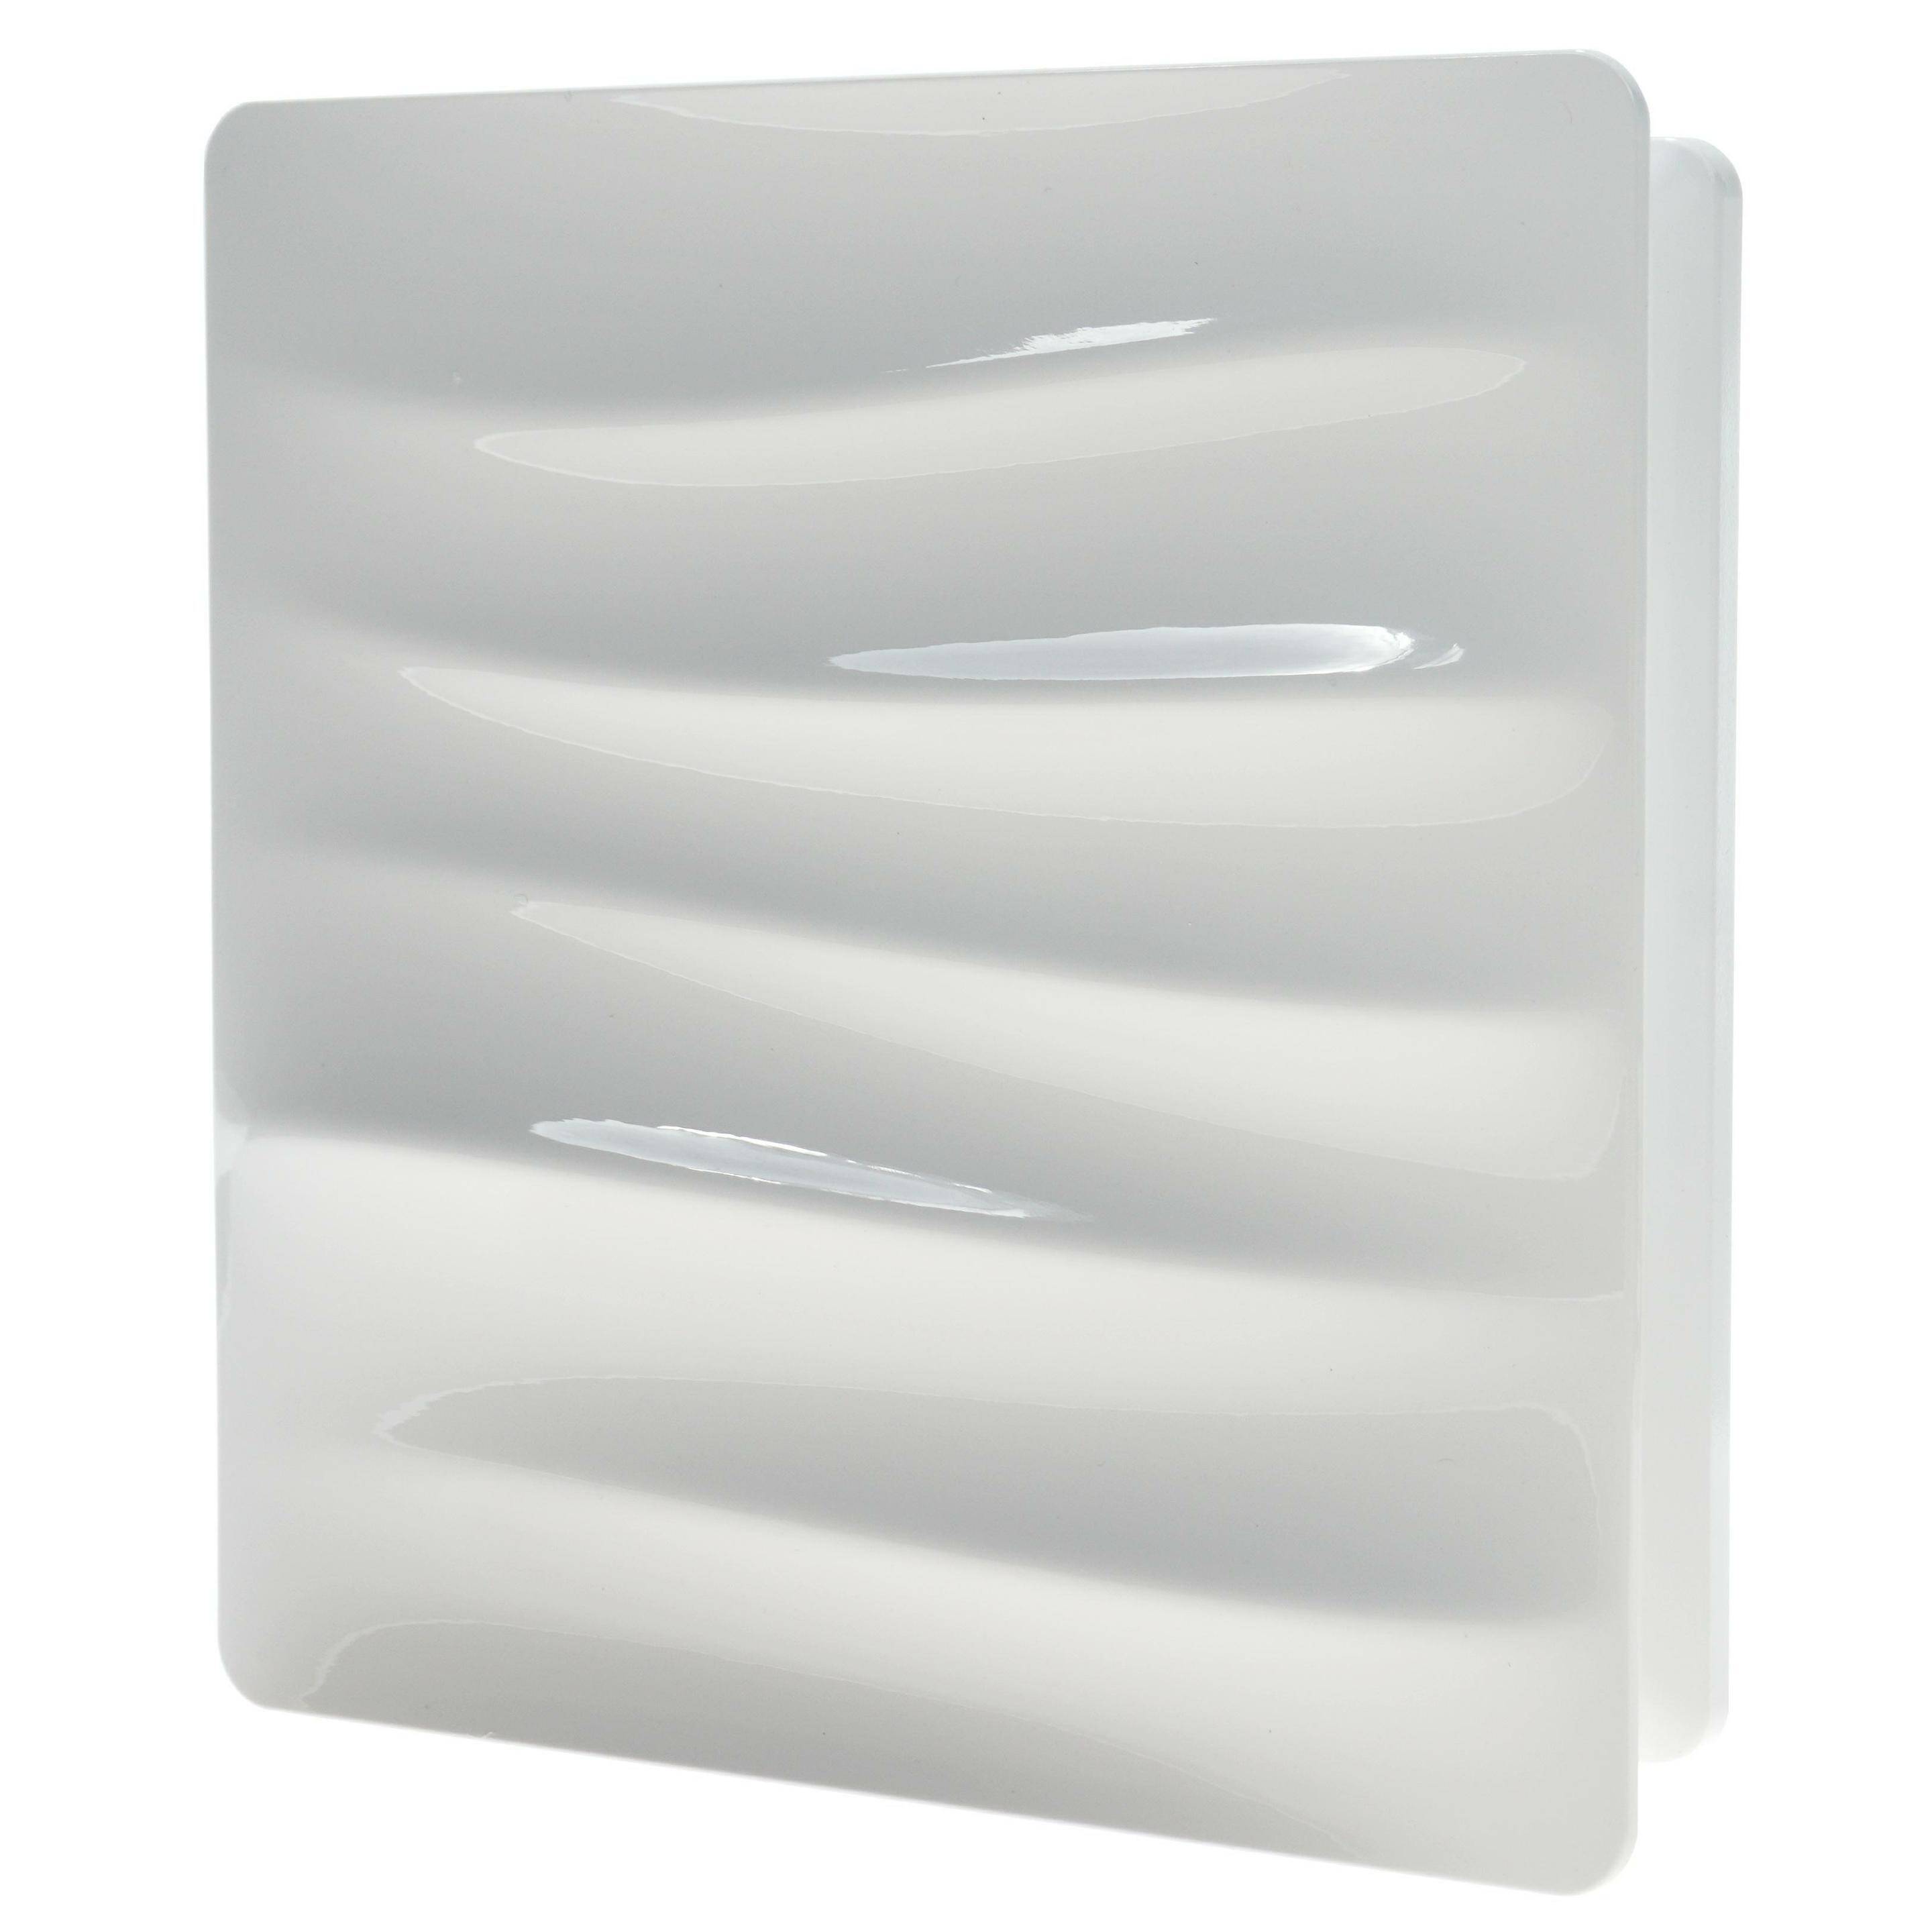 White Ventilation Grille 16x16